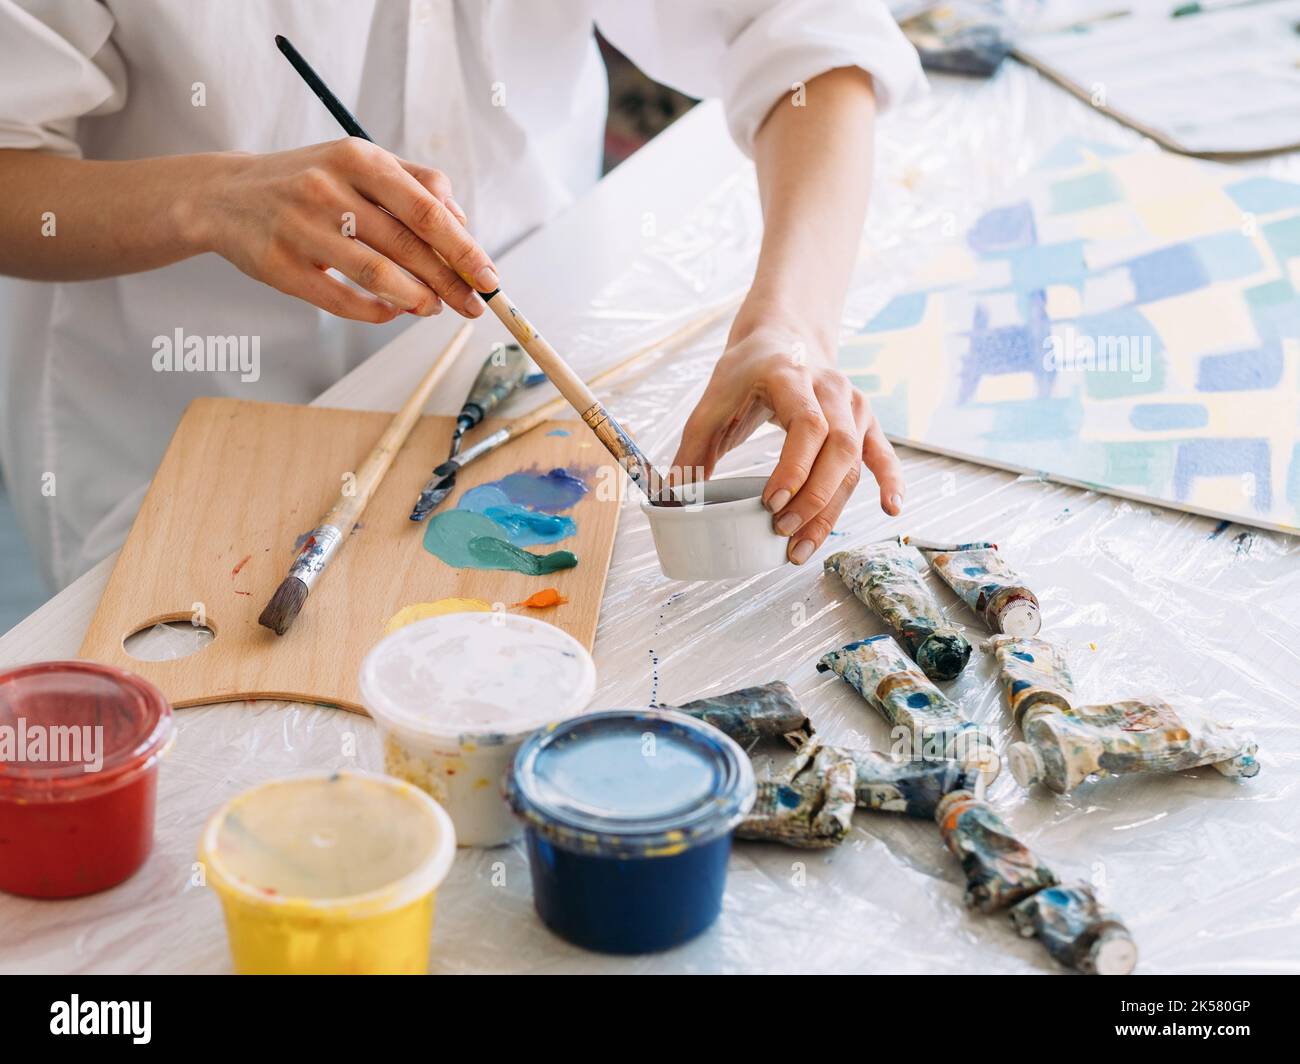 https://c8.alamy.com/comp/2K580GP/art-hobby-painting-supplies-hands-mixing-paint-2K580GP.jpg